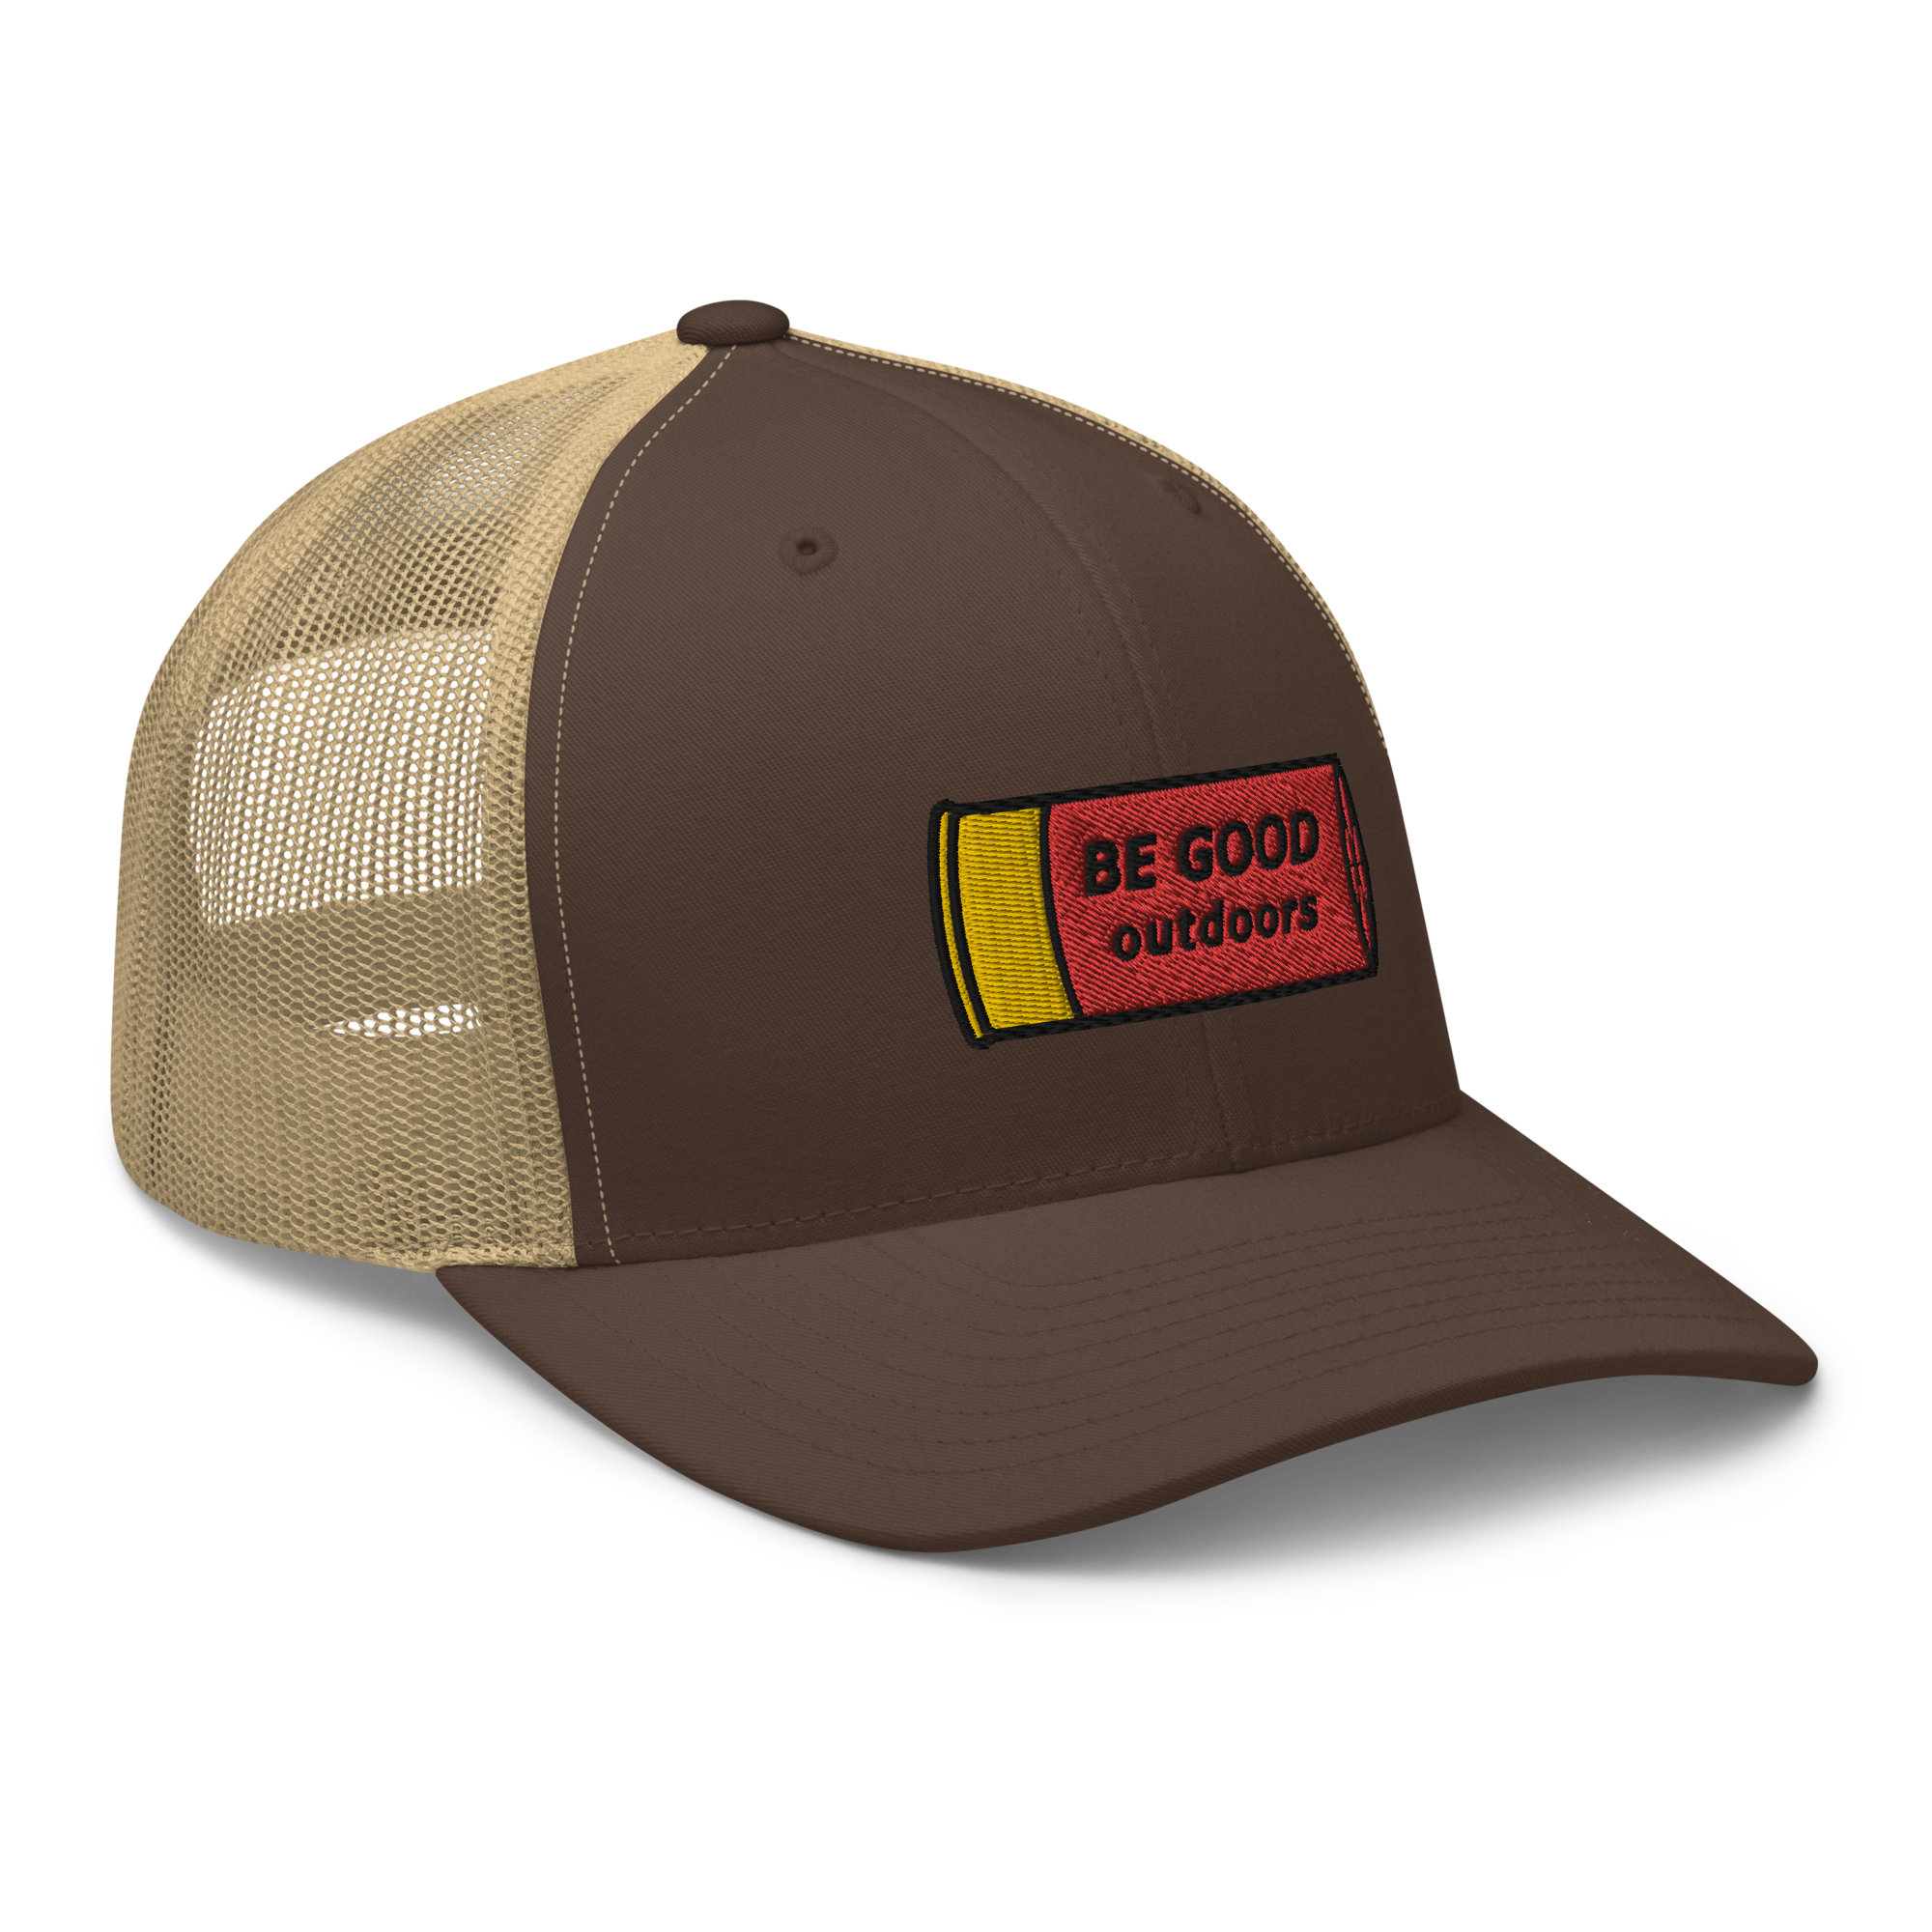 Shotgun Shell - Trucker Hat  Trucker hat, Flat bill hats, Trucker